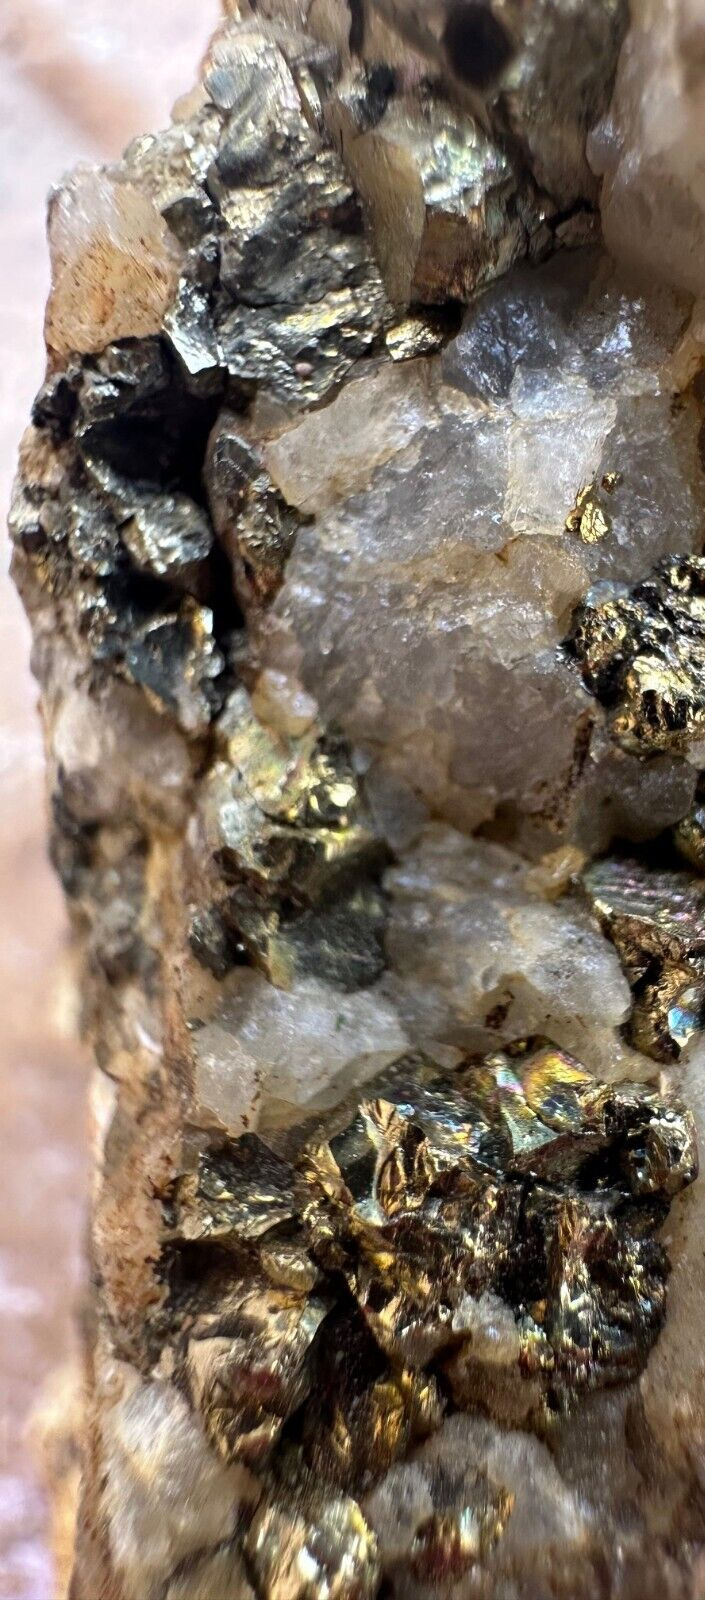 Genuine Gold and Silver Quartz Ore - Mining Heritage Piece